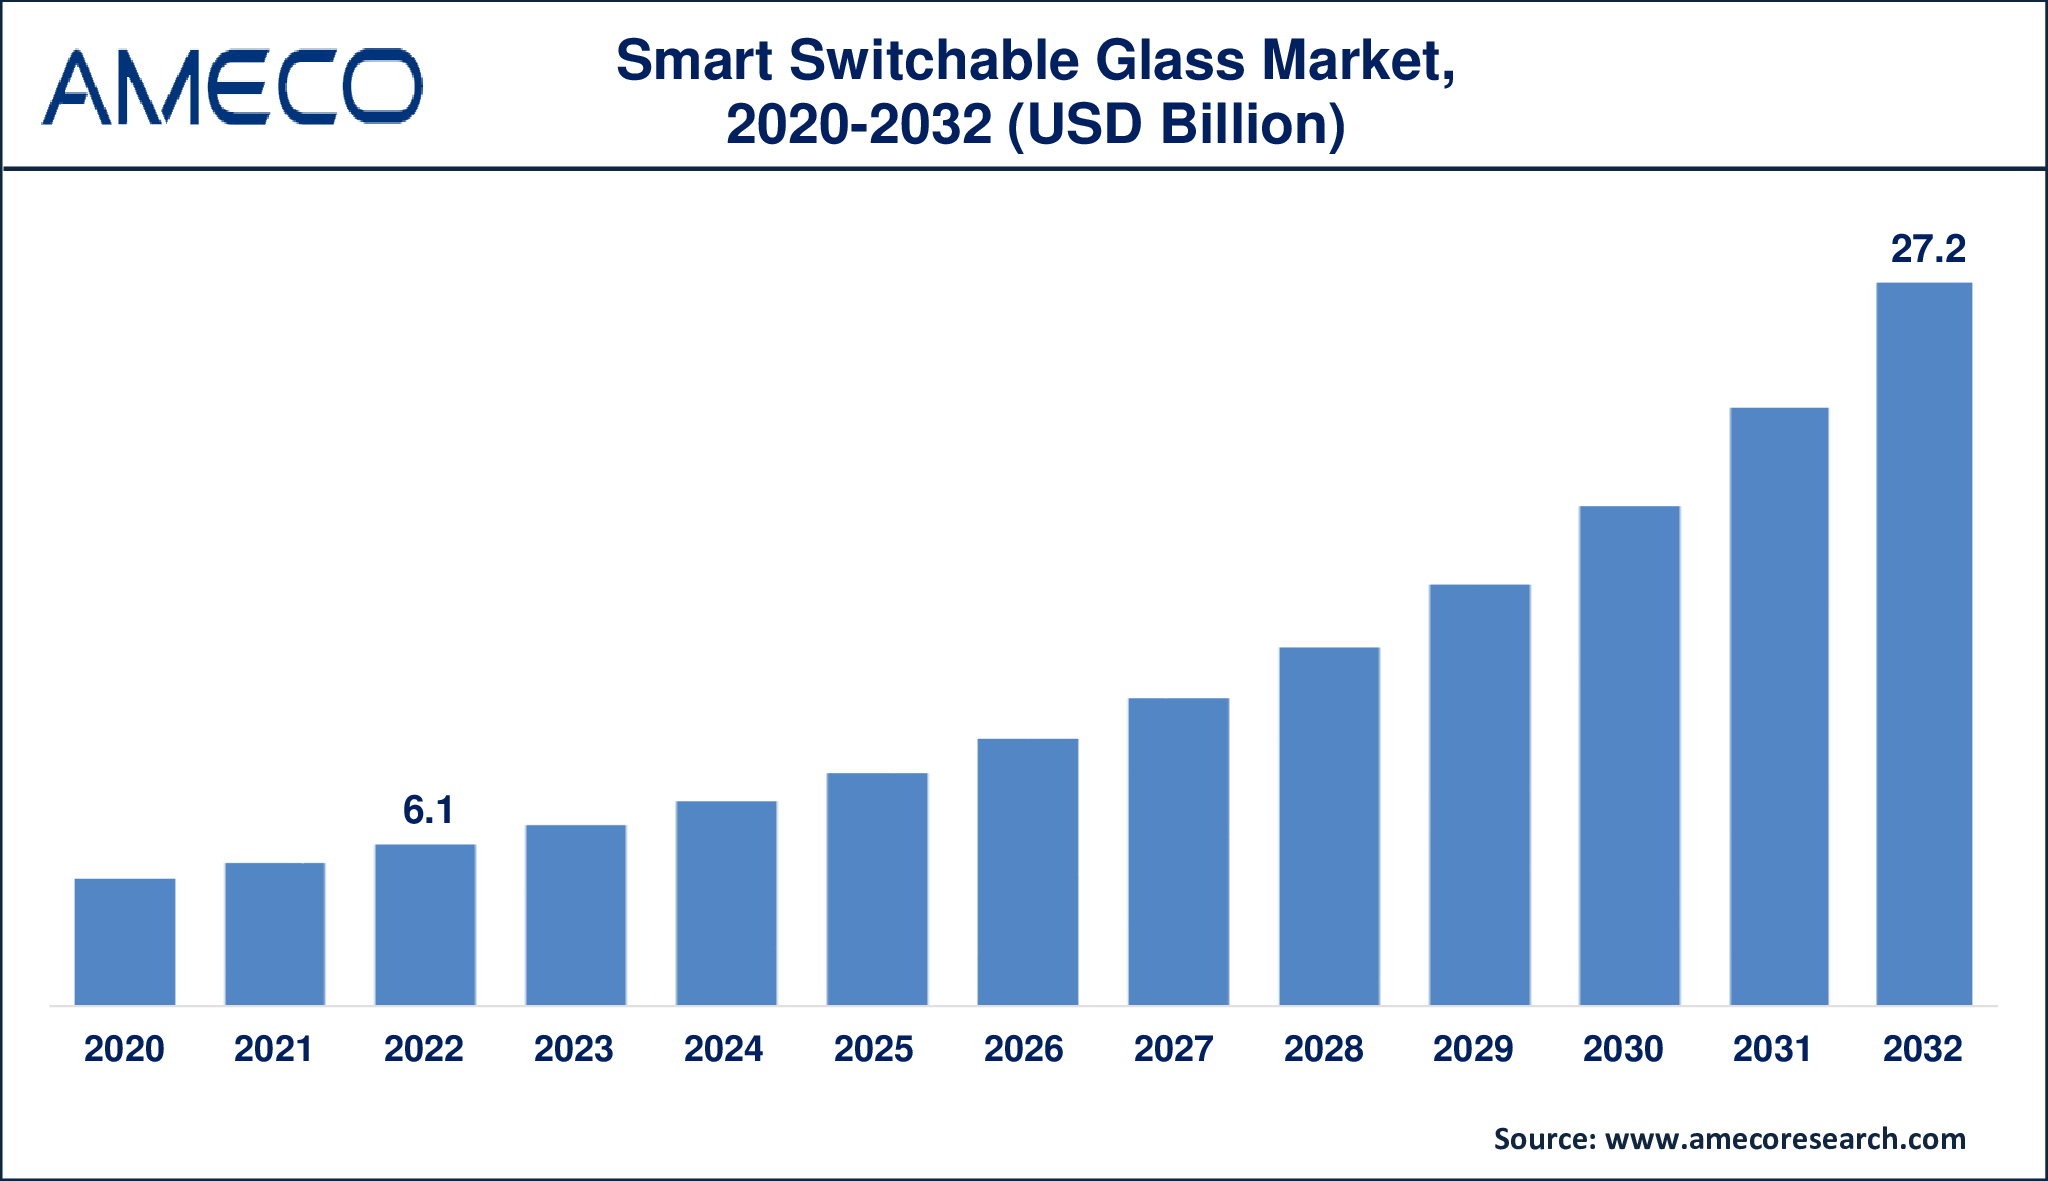 Smart Switchable Glass Market Dynamics